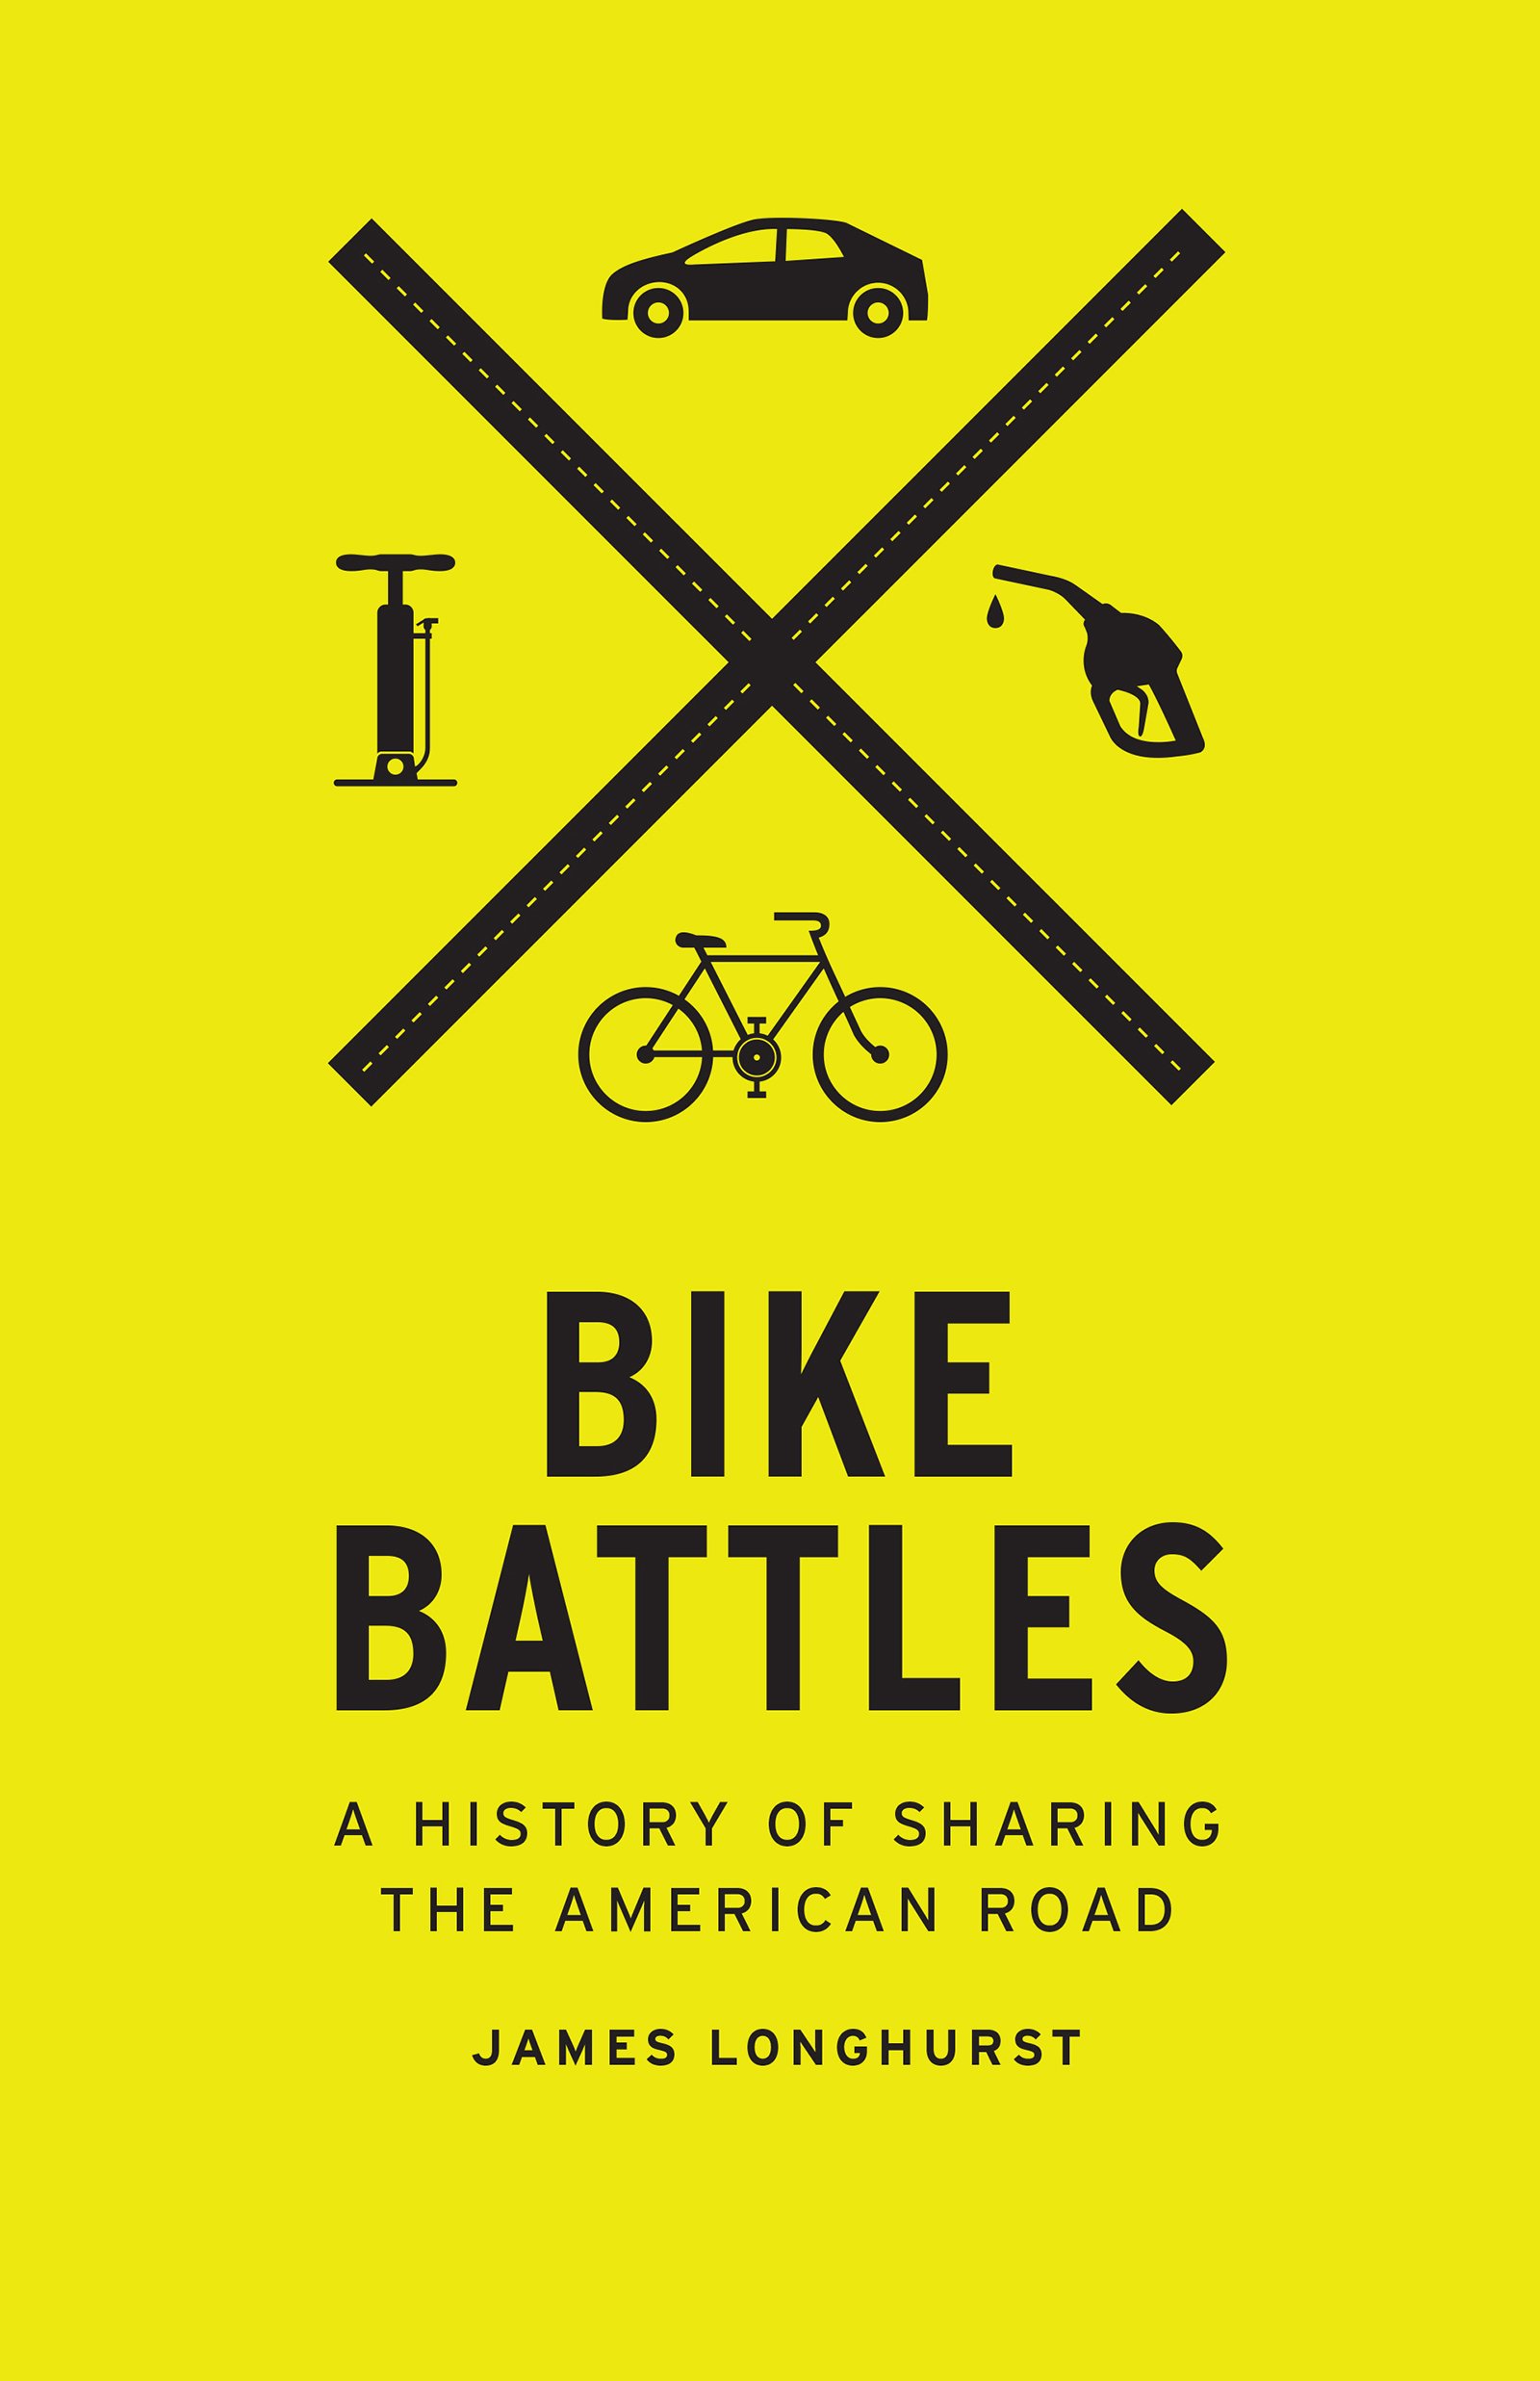 Bike Battles (2015, University of Washington Press)